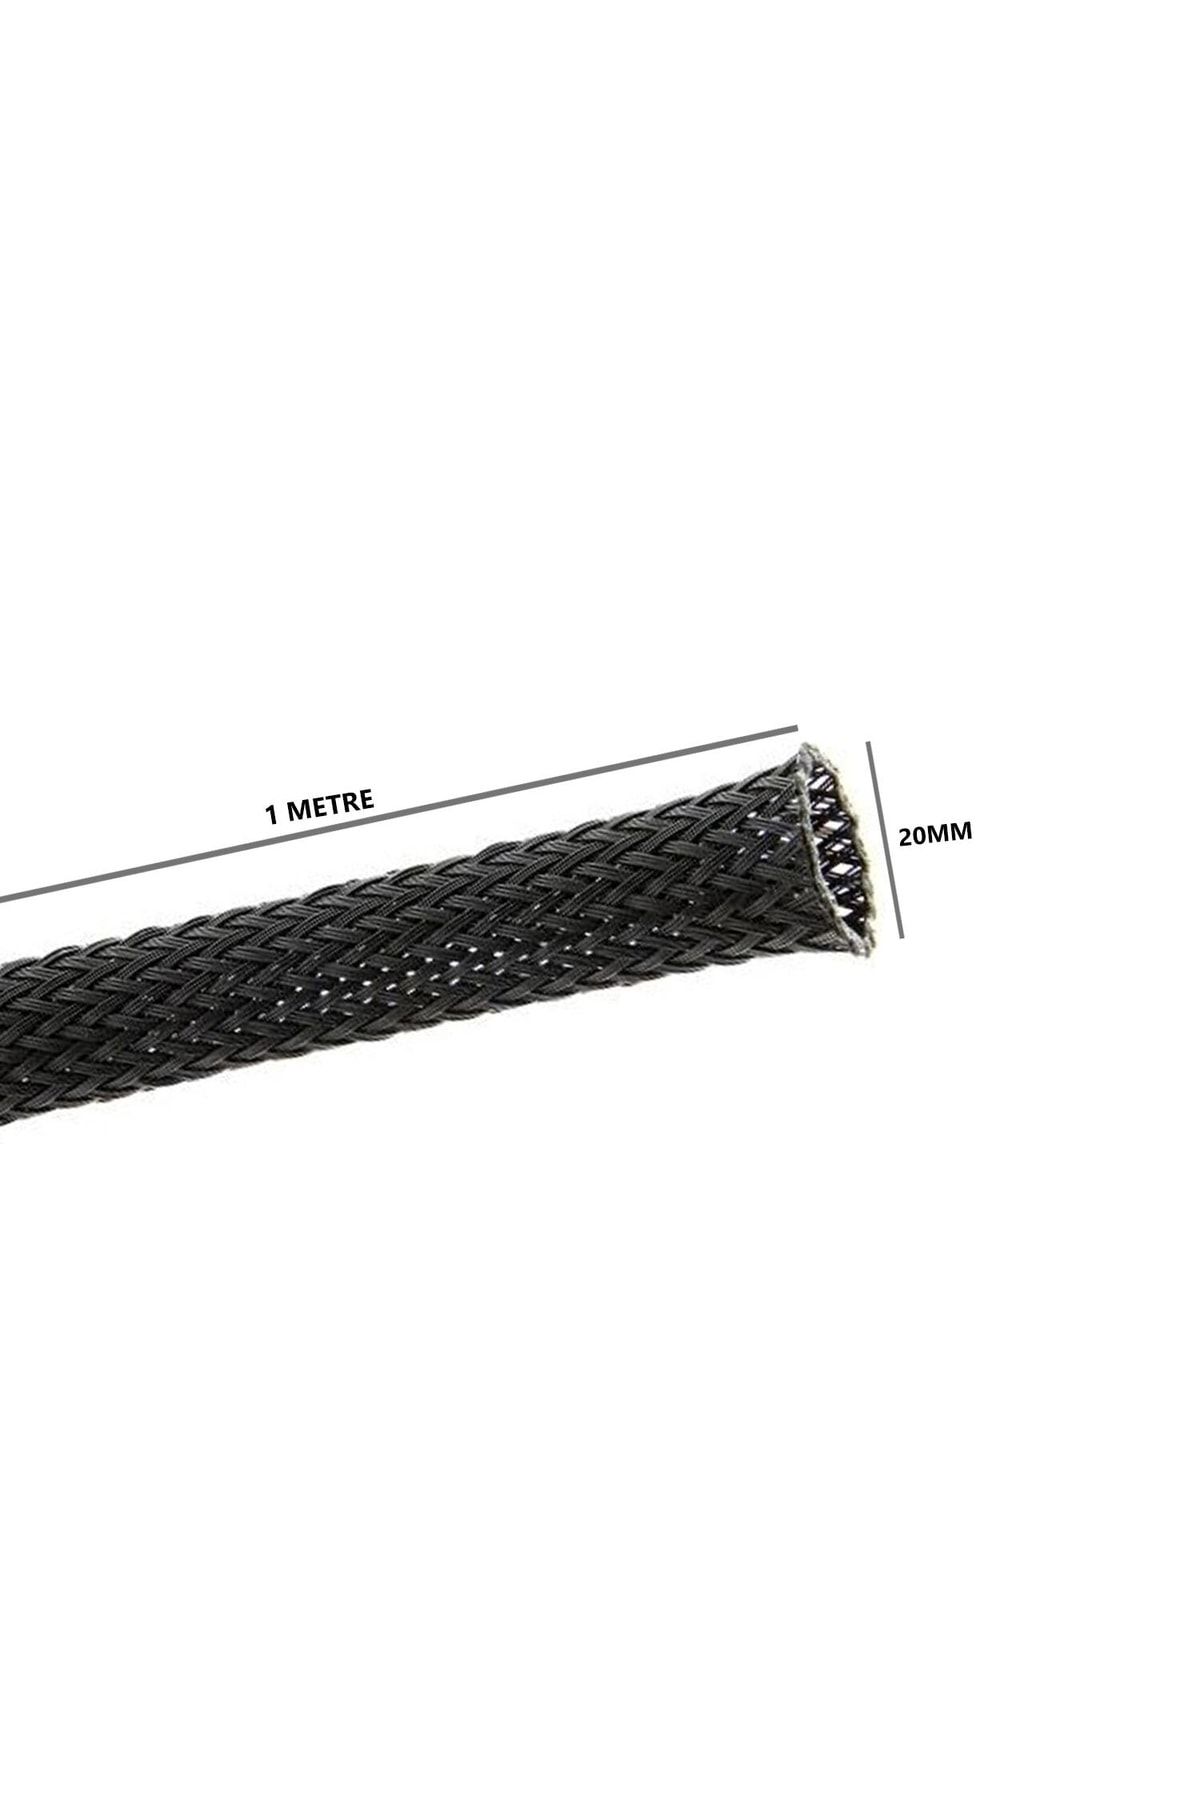 For-X Kablo Toplama Çorabı 20mm 1mt X-102s